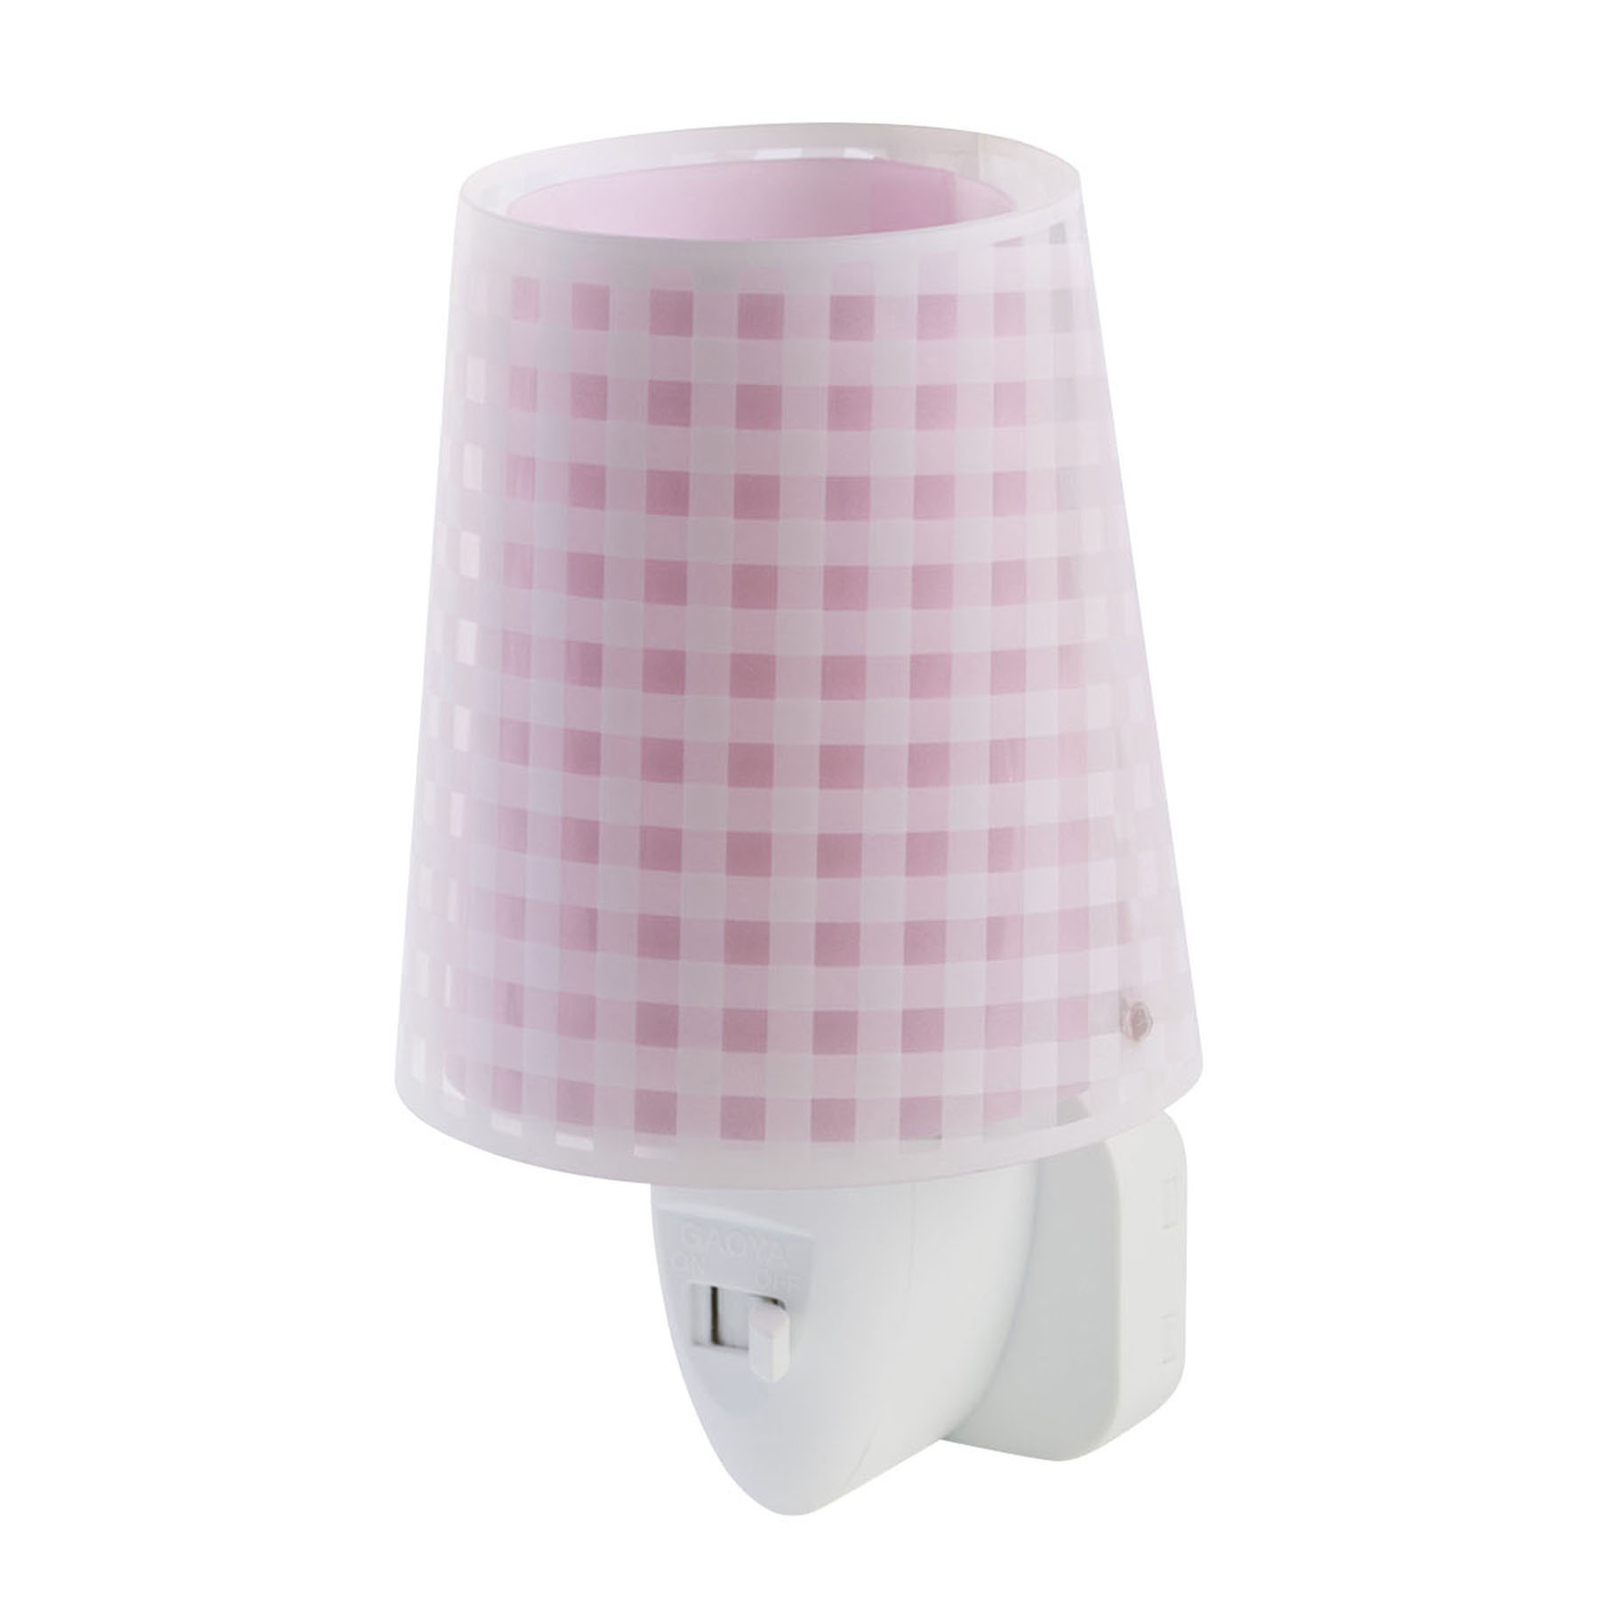 LED-nattlys Vichy i rosa